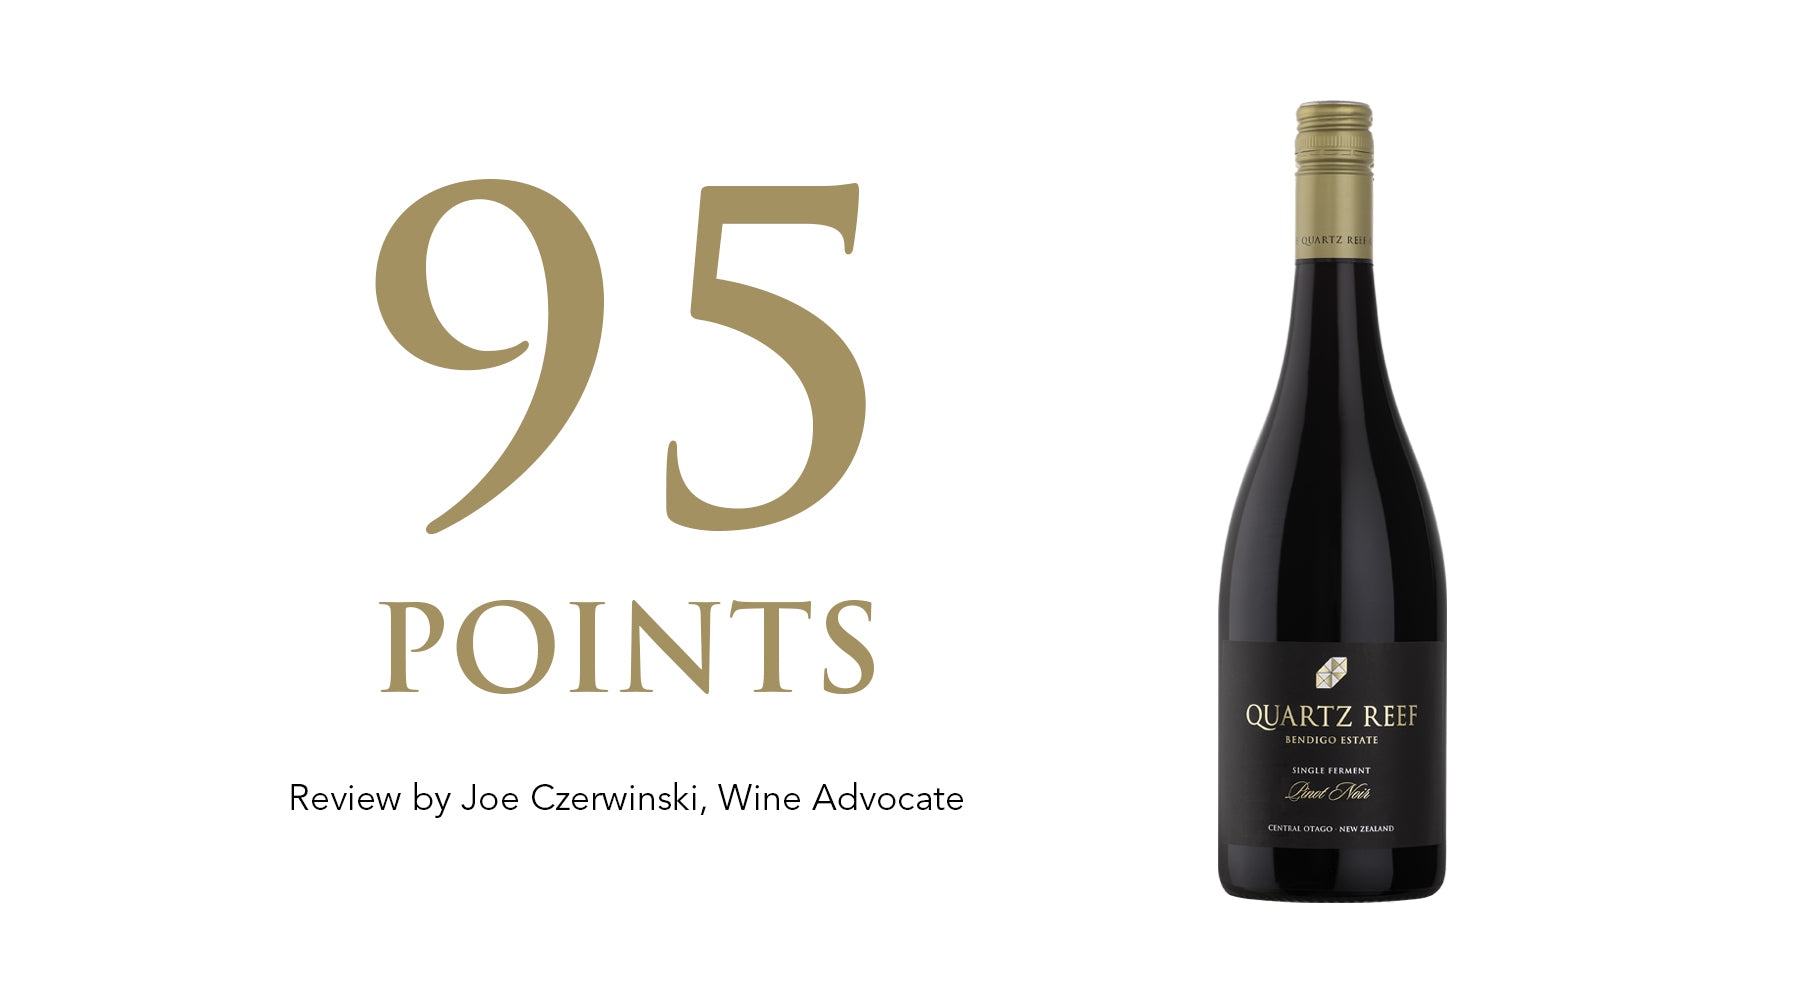 Single Ferment Pinot Noir 2019 - Awarded 95 Points